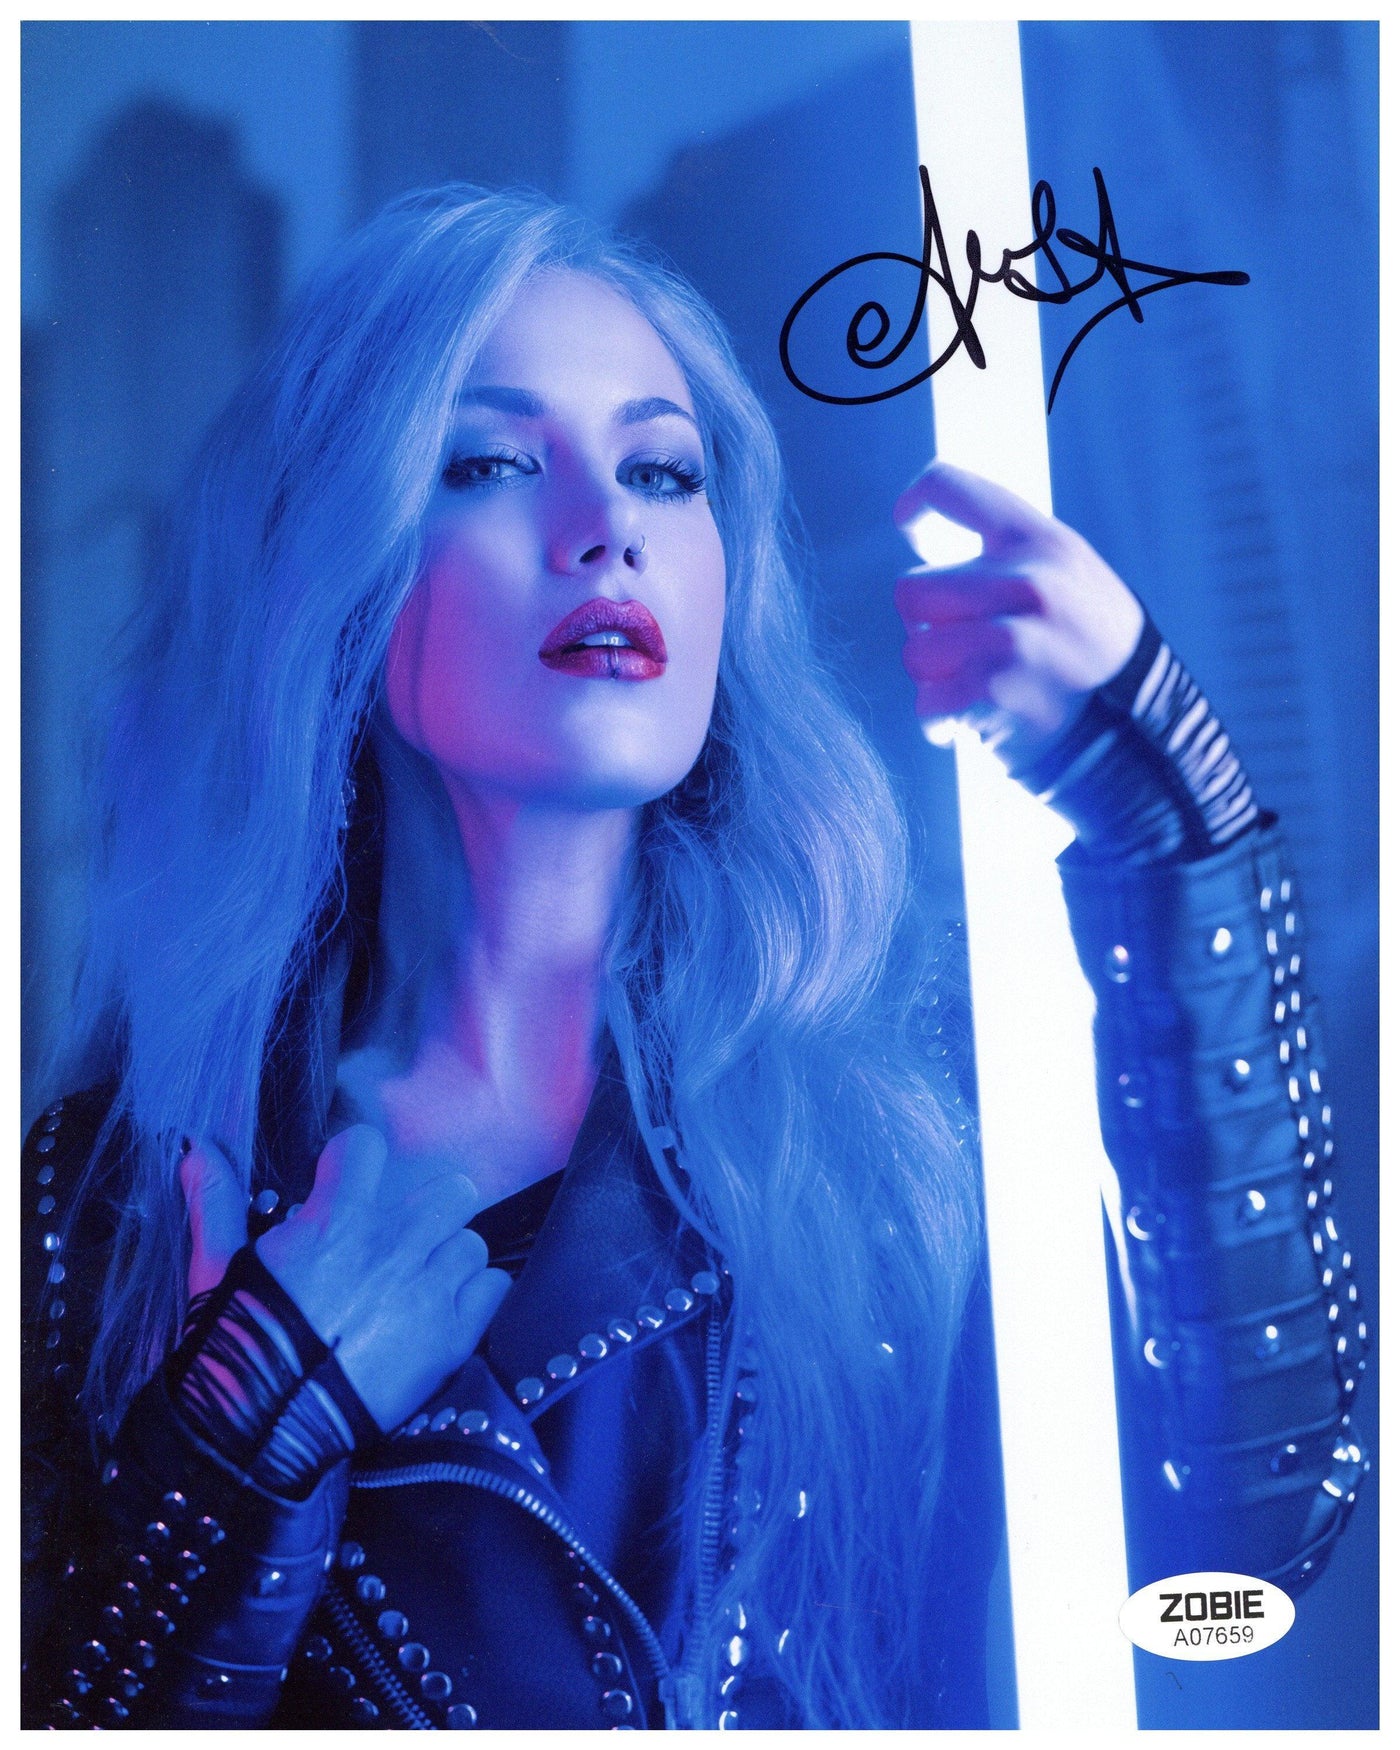 Alissa White-Gluz Signed 8x10 Photo Arch Enemy Singer Autographed Zobie COA #2